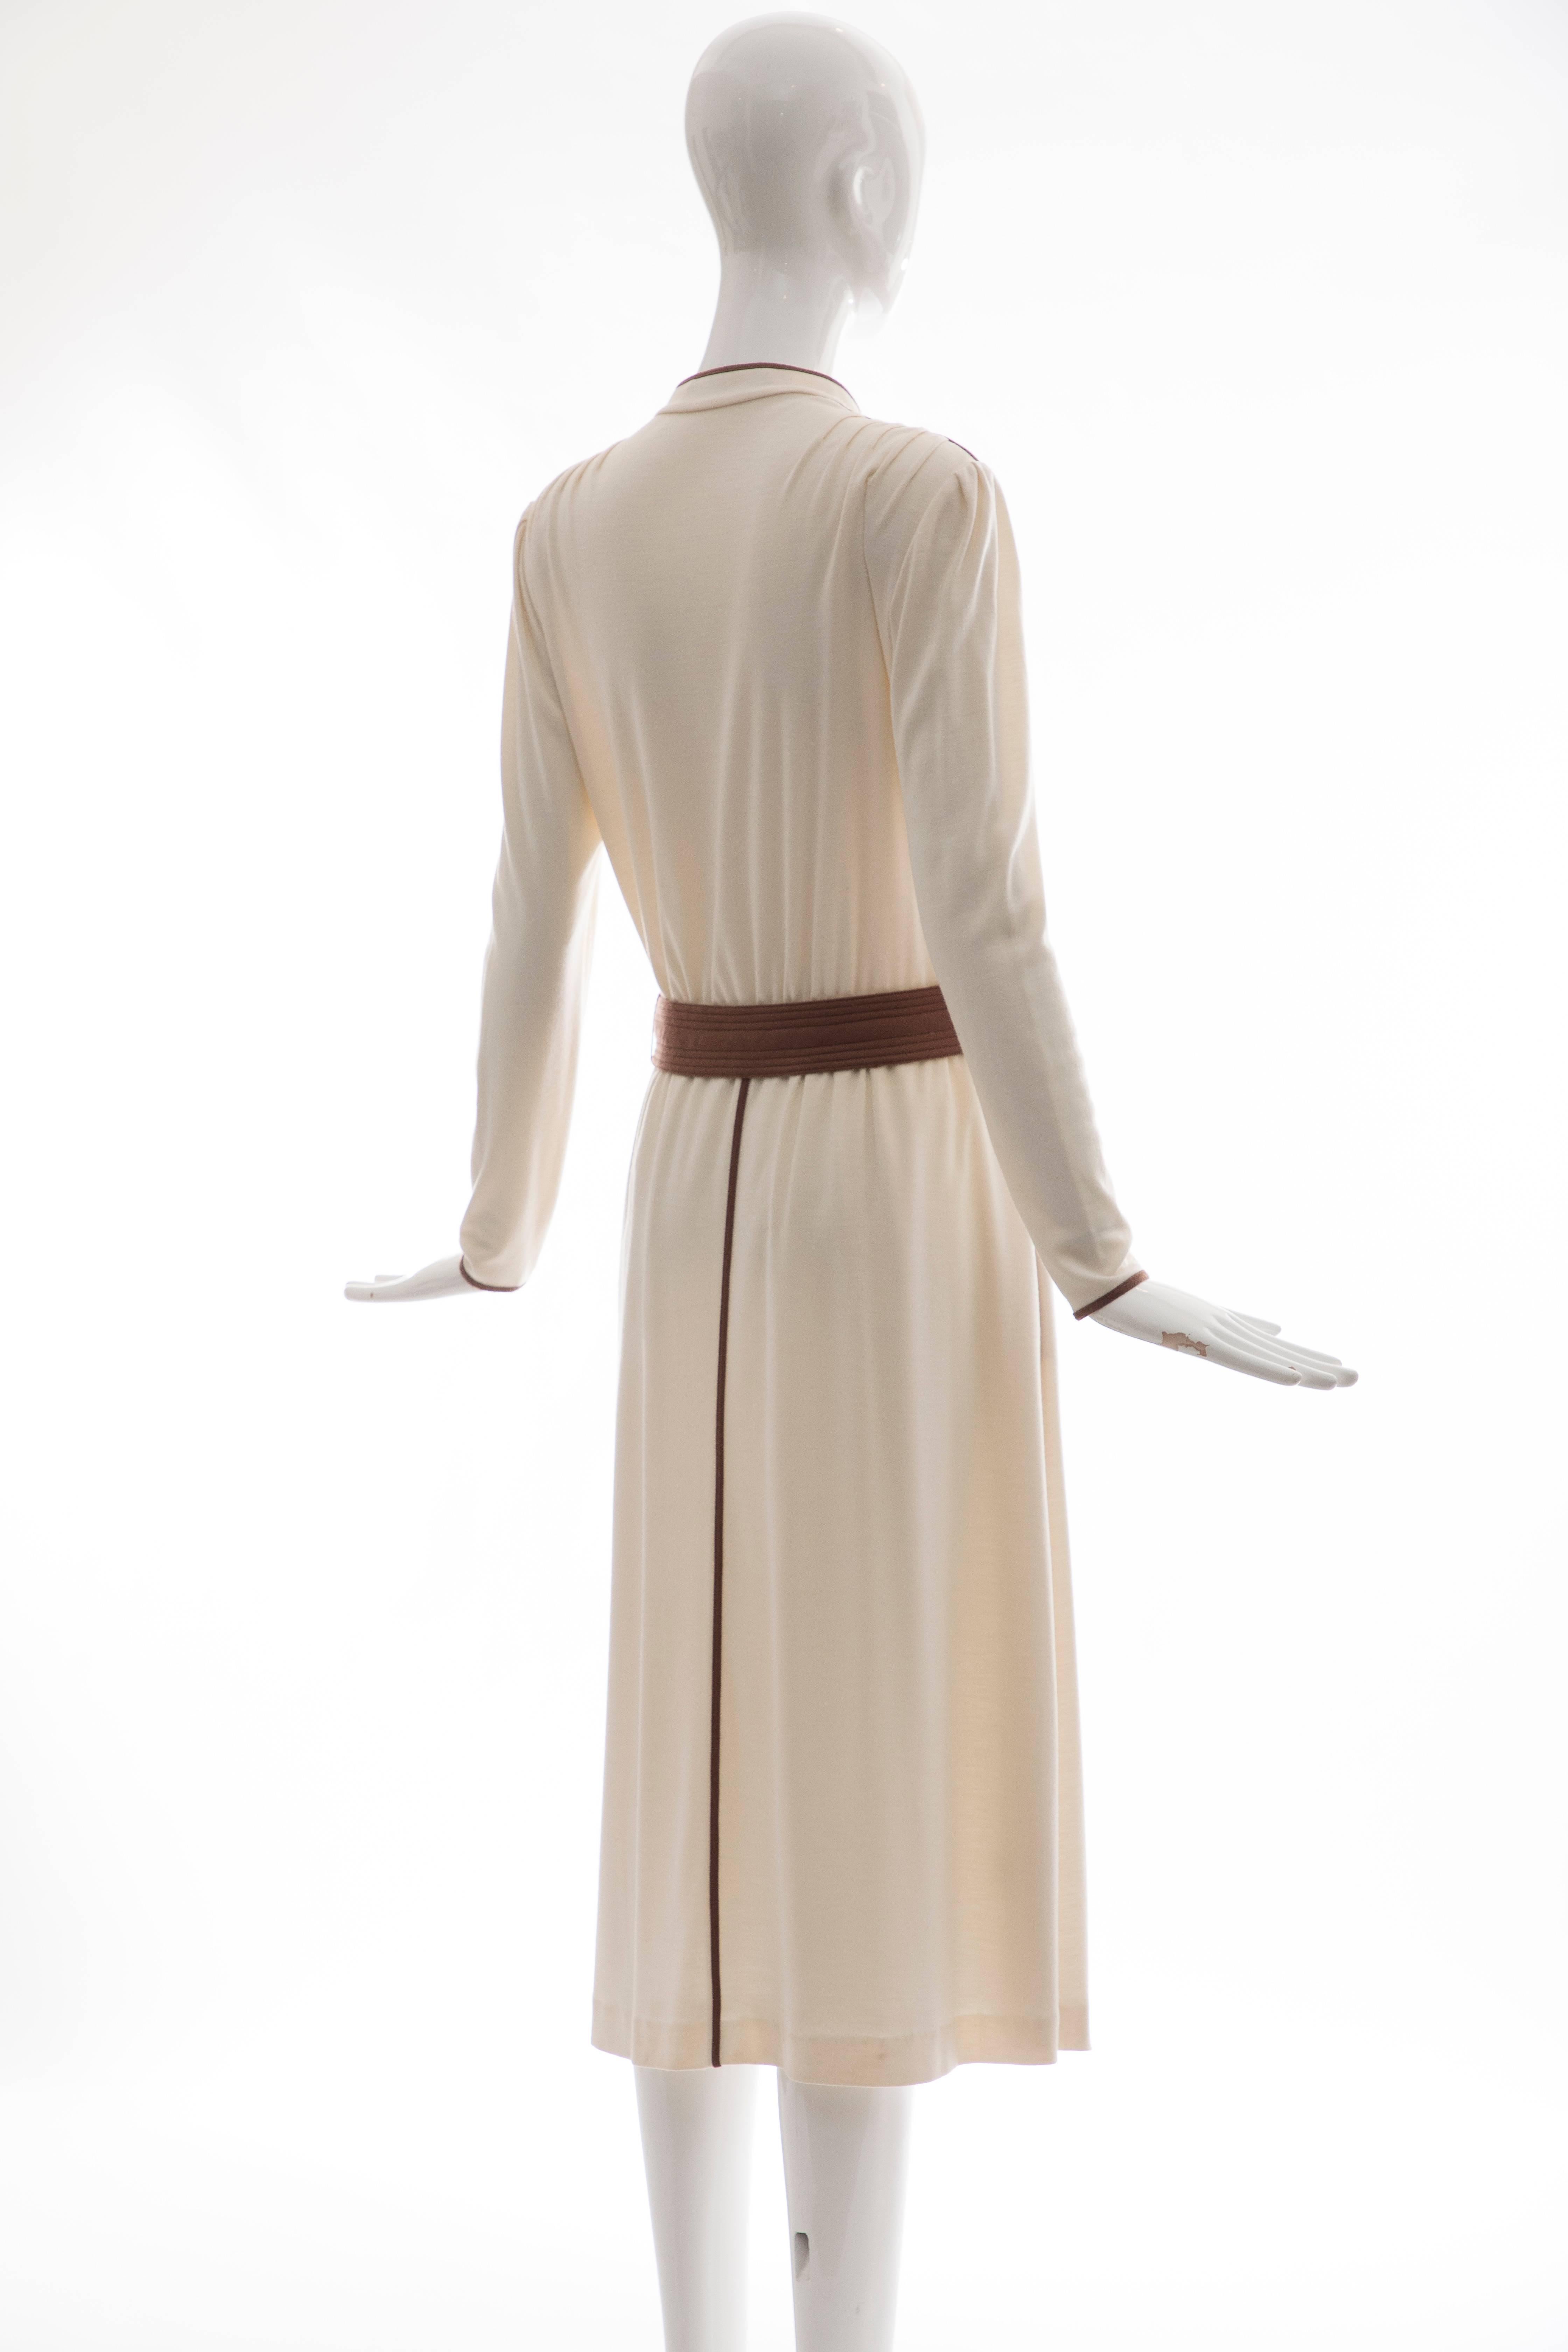 Louis Feraud Cream Cotton Jersey Dress With Deep V Neckline, Circa 1980s  For Sale 2